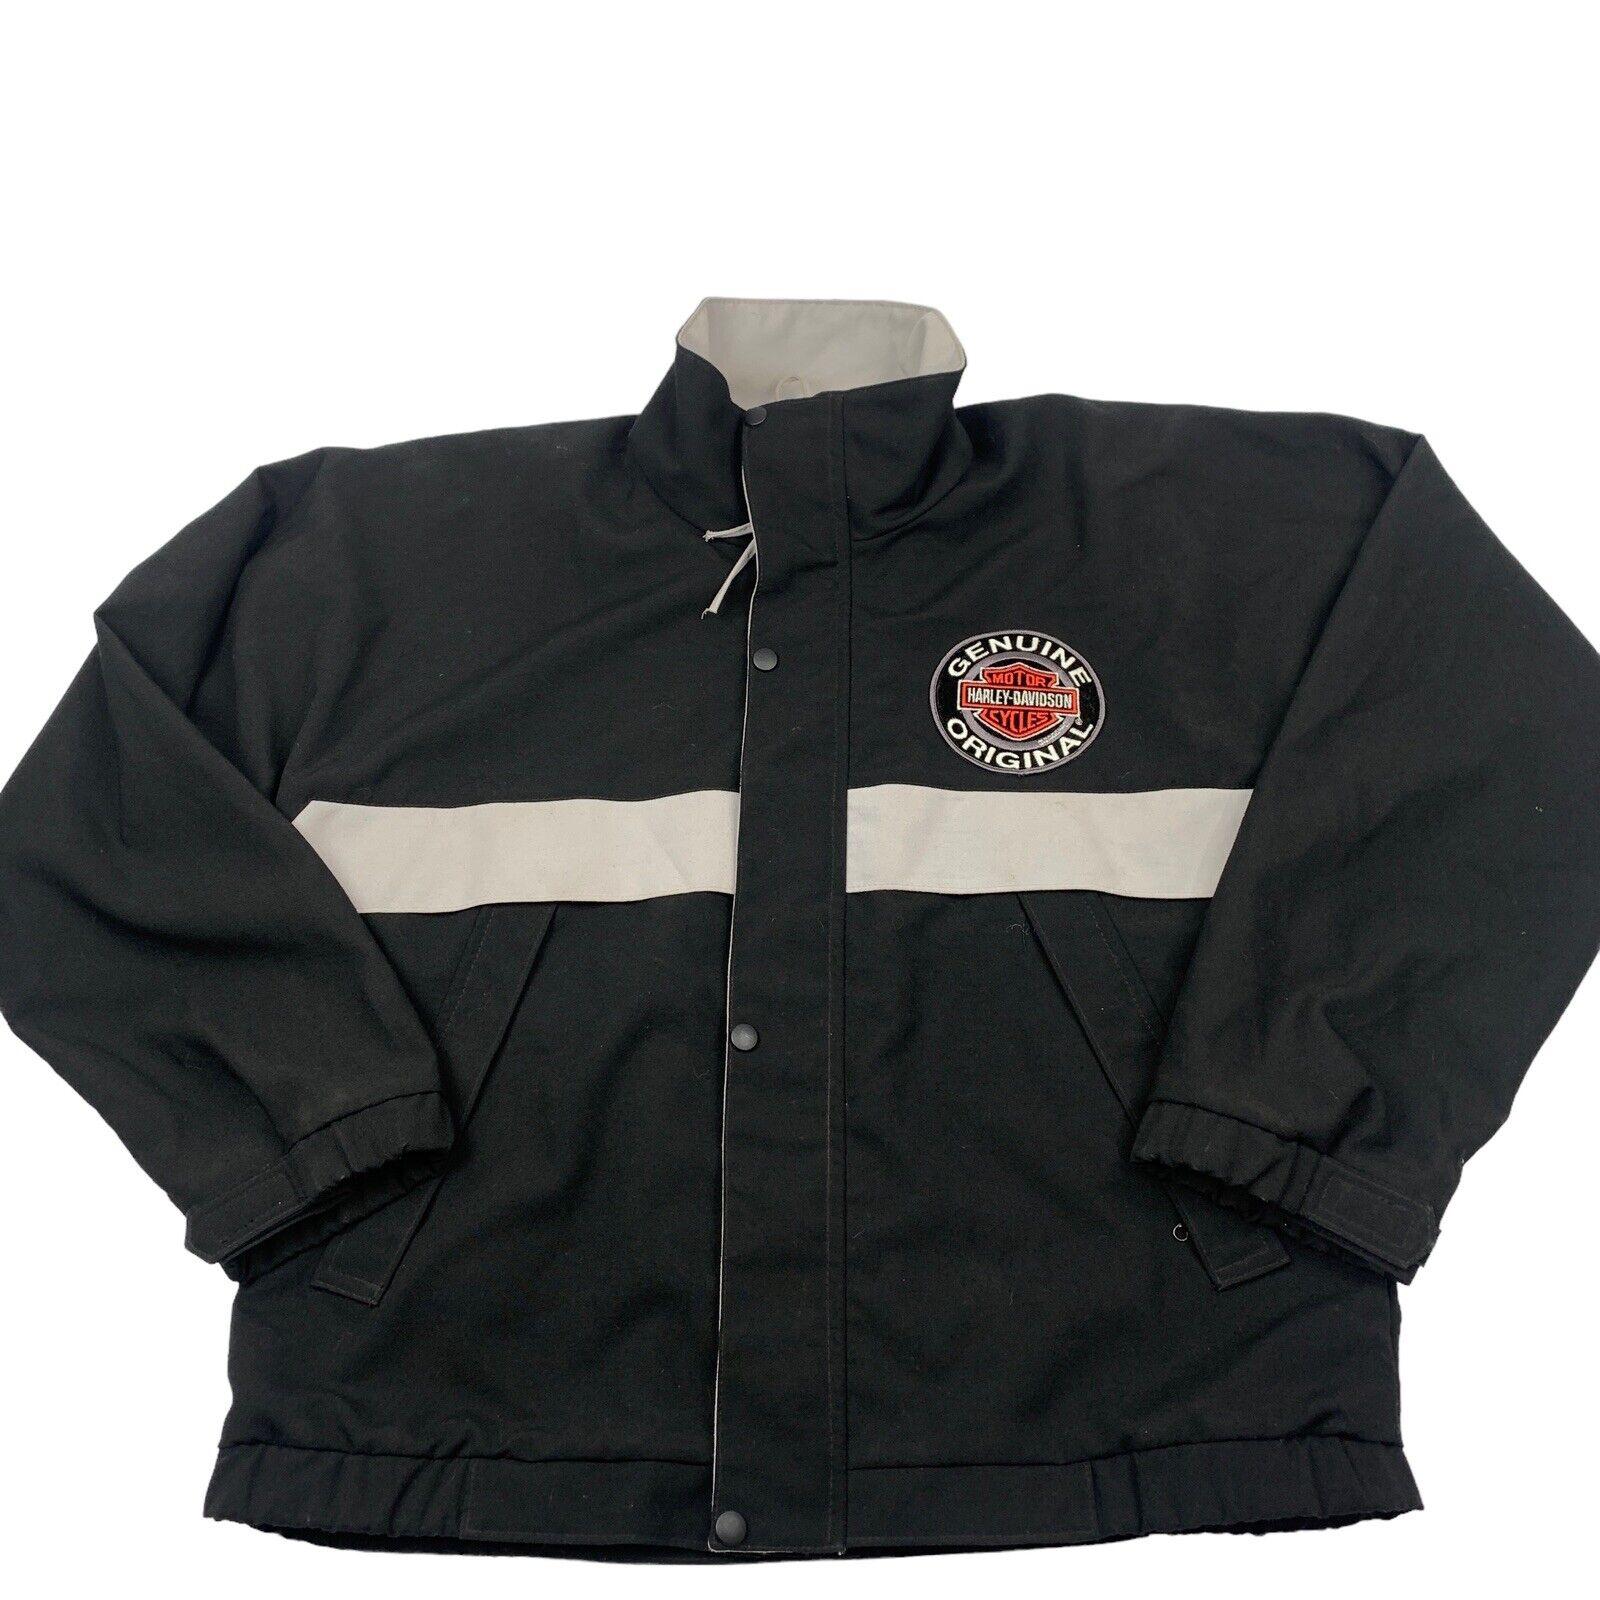 Harley Davidson black jacket patch creative garments made USA M VTG